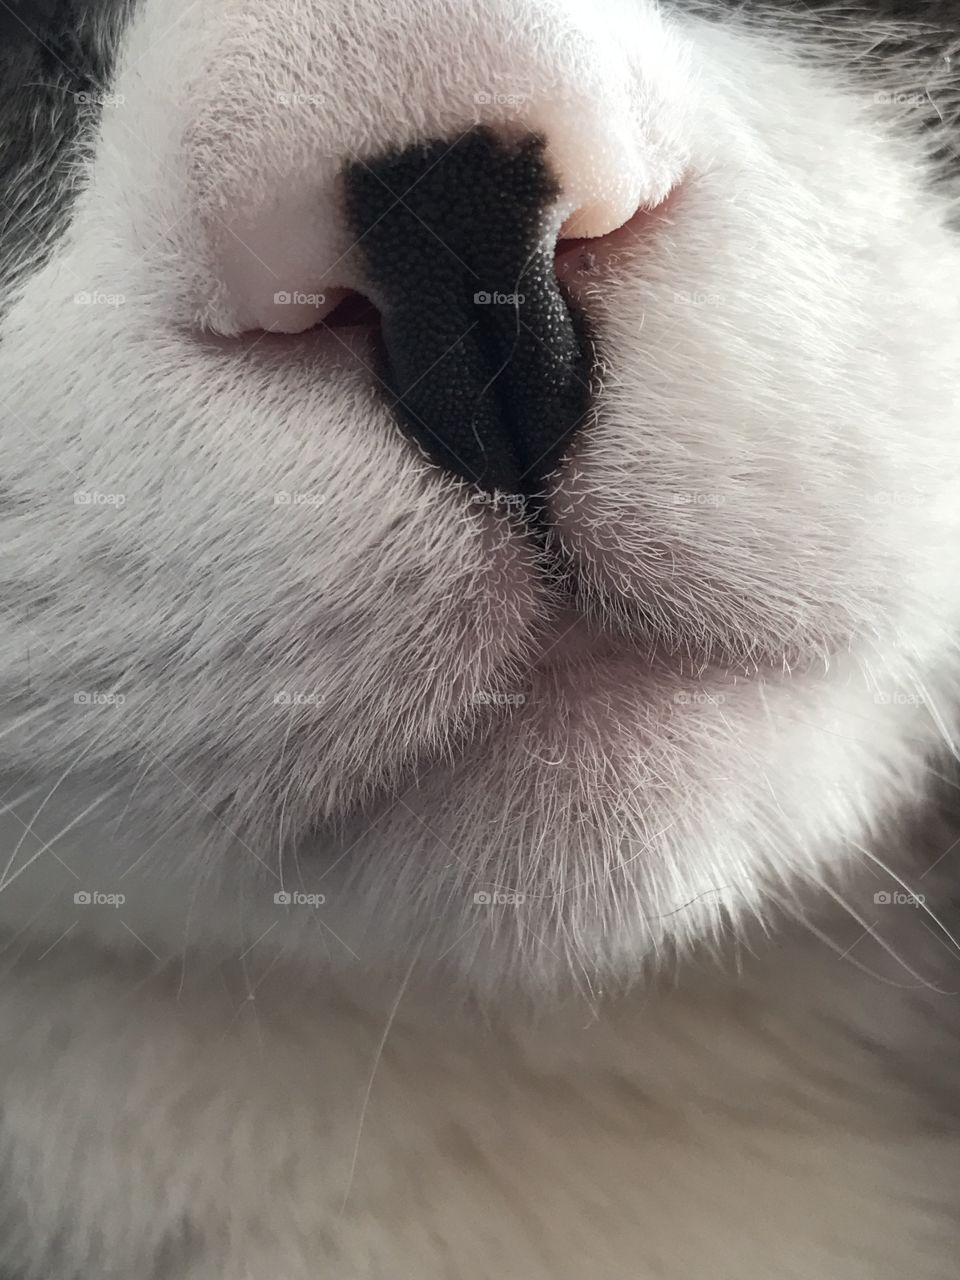 Up close kitty